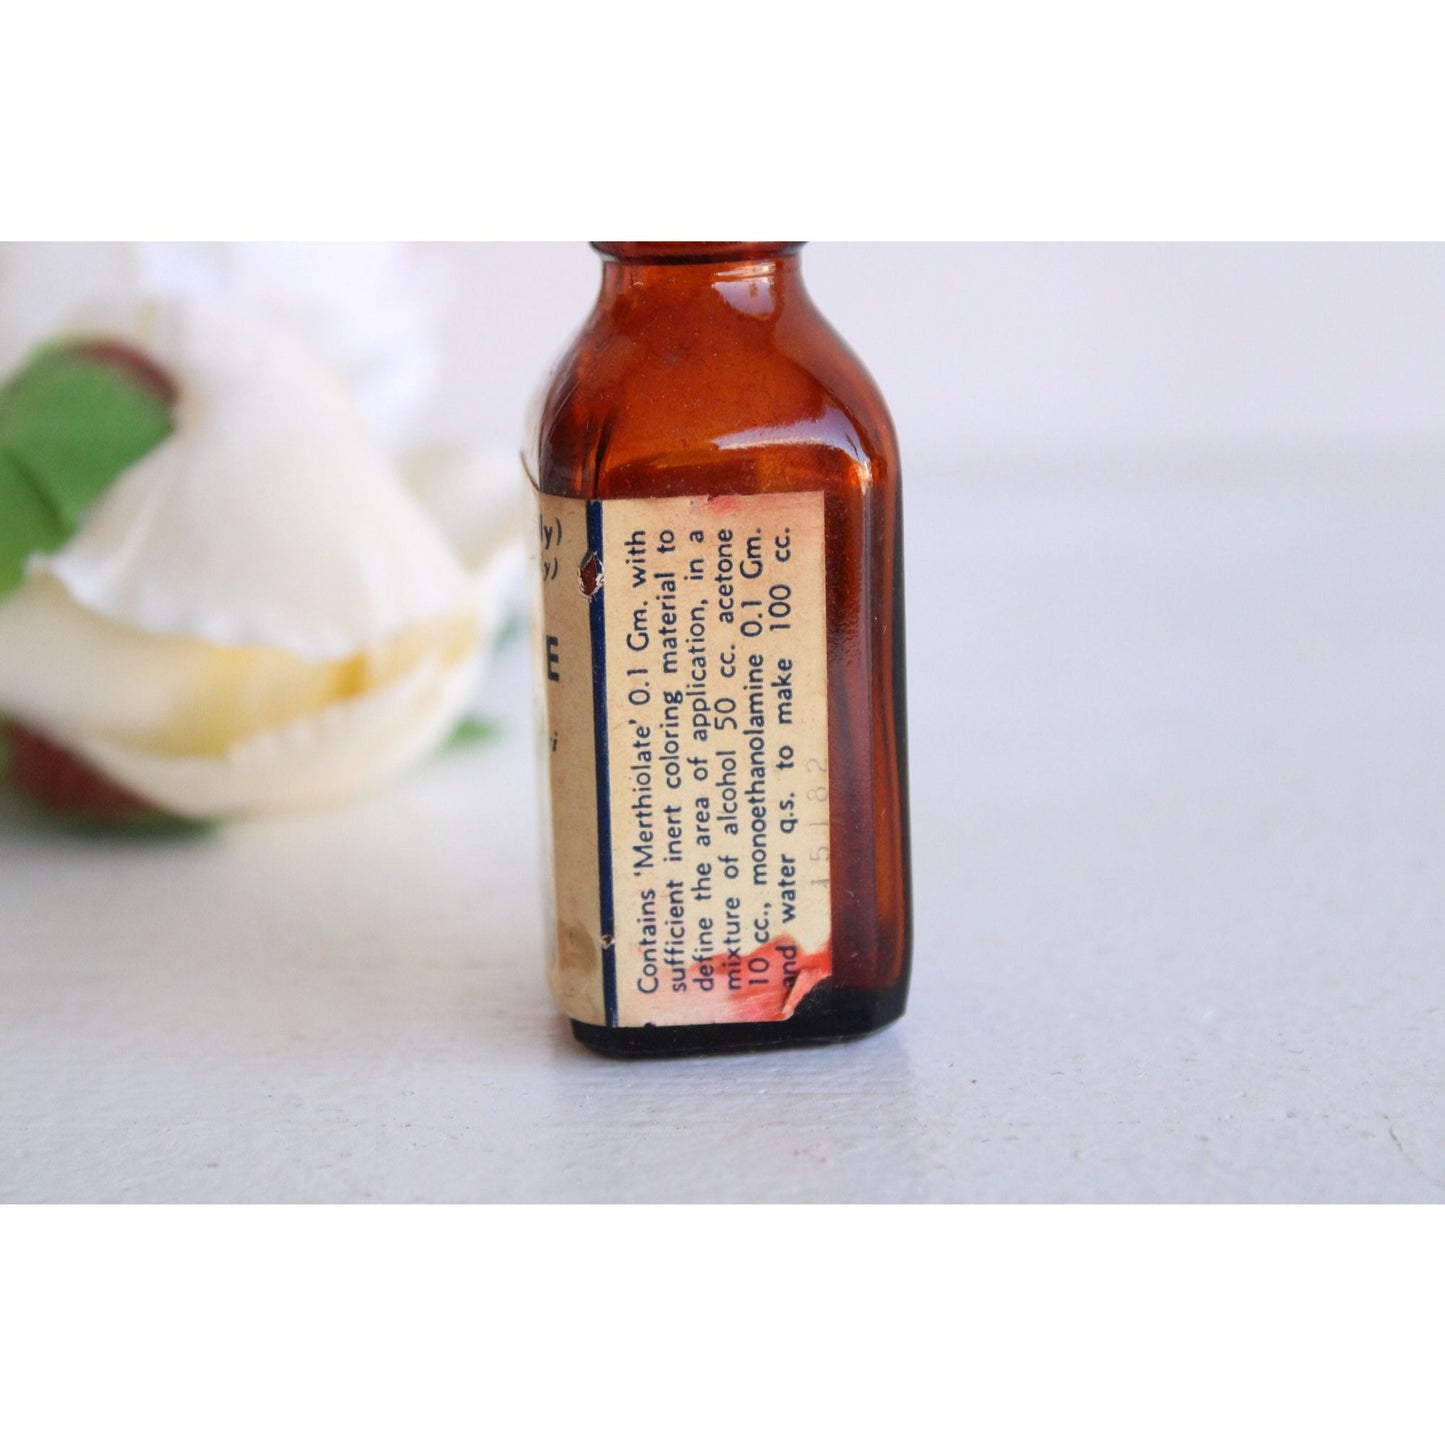 Vintage 1930s 1940s Poison Bottle of Merthiolate Tincture